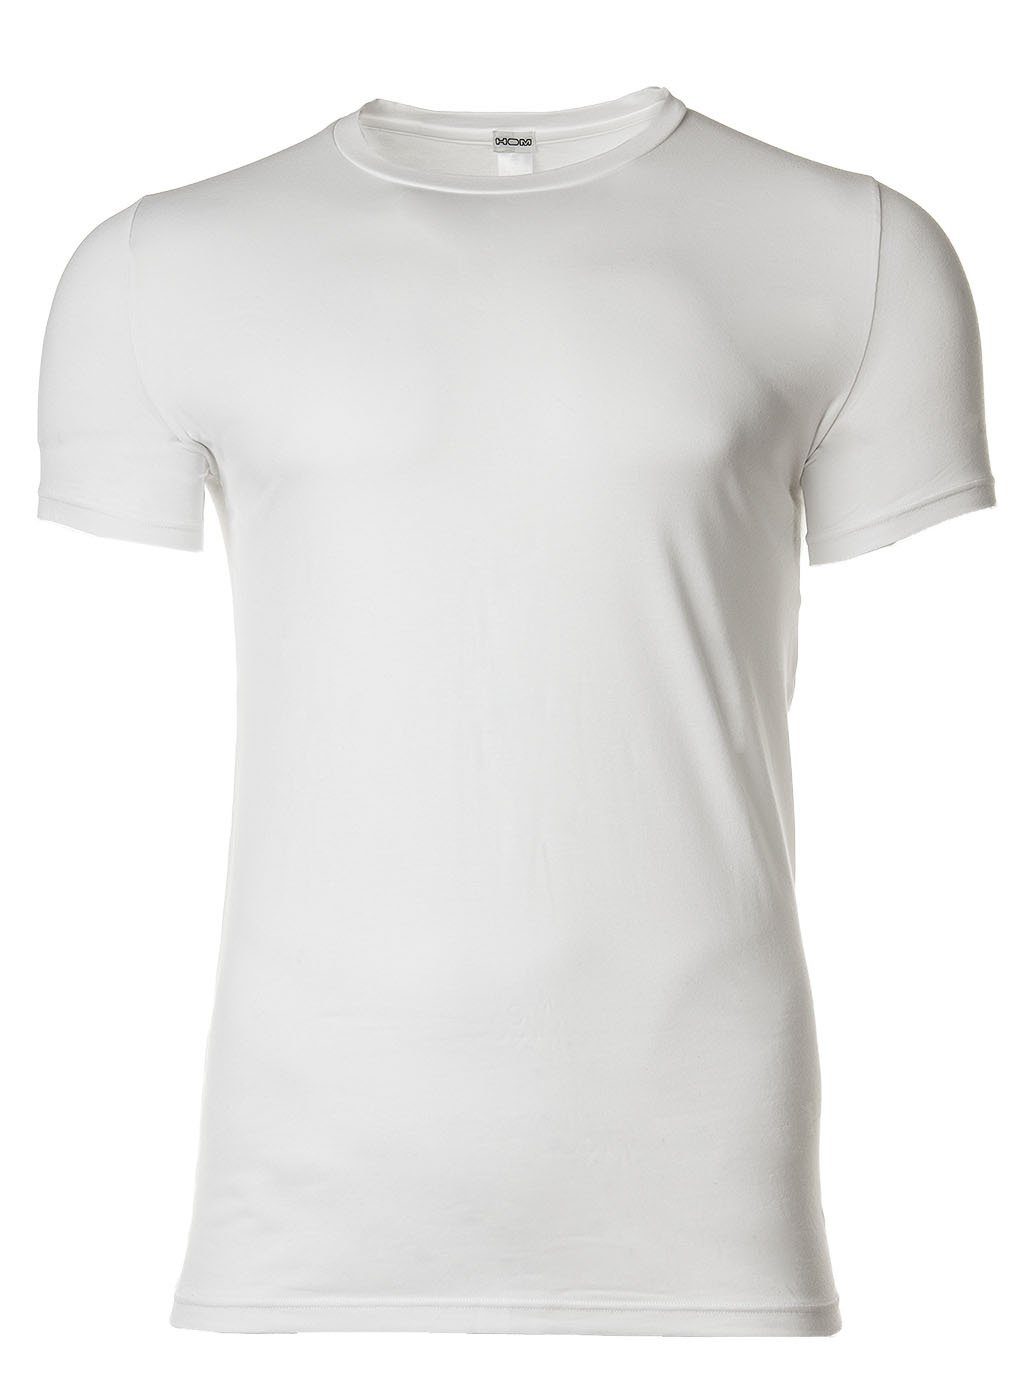 Hom T-Shirt Tee T-Shirt - Neck Herren Shirt Crew Supreme Weiß